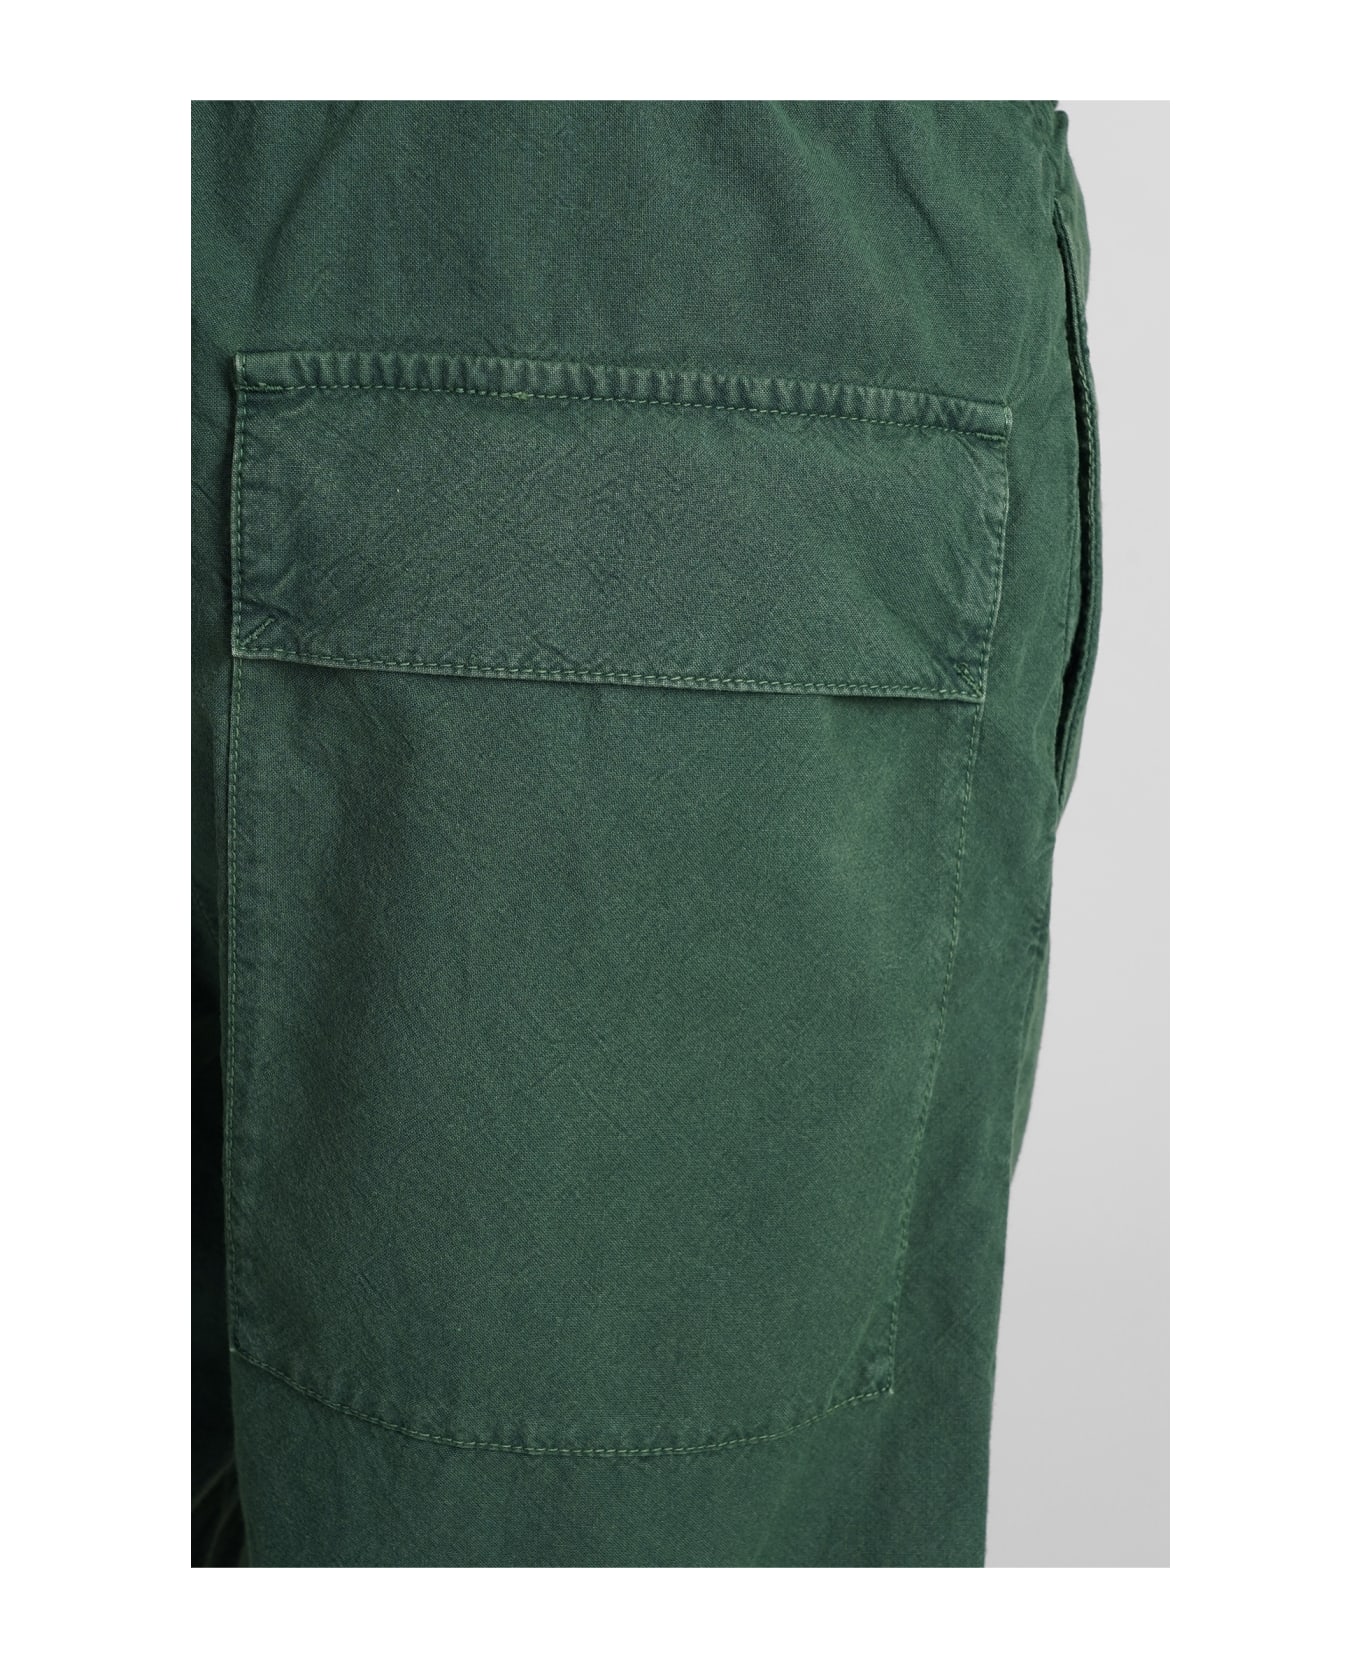 Barena Canariol Shorts In Green Cotton - green